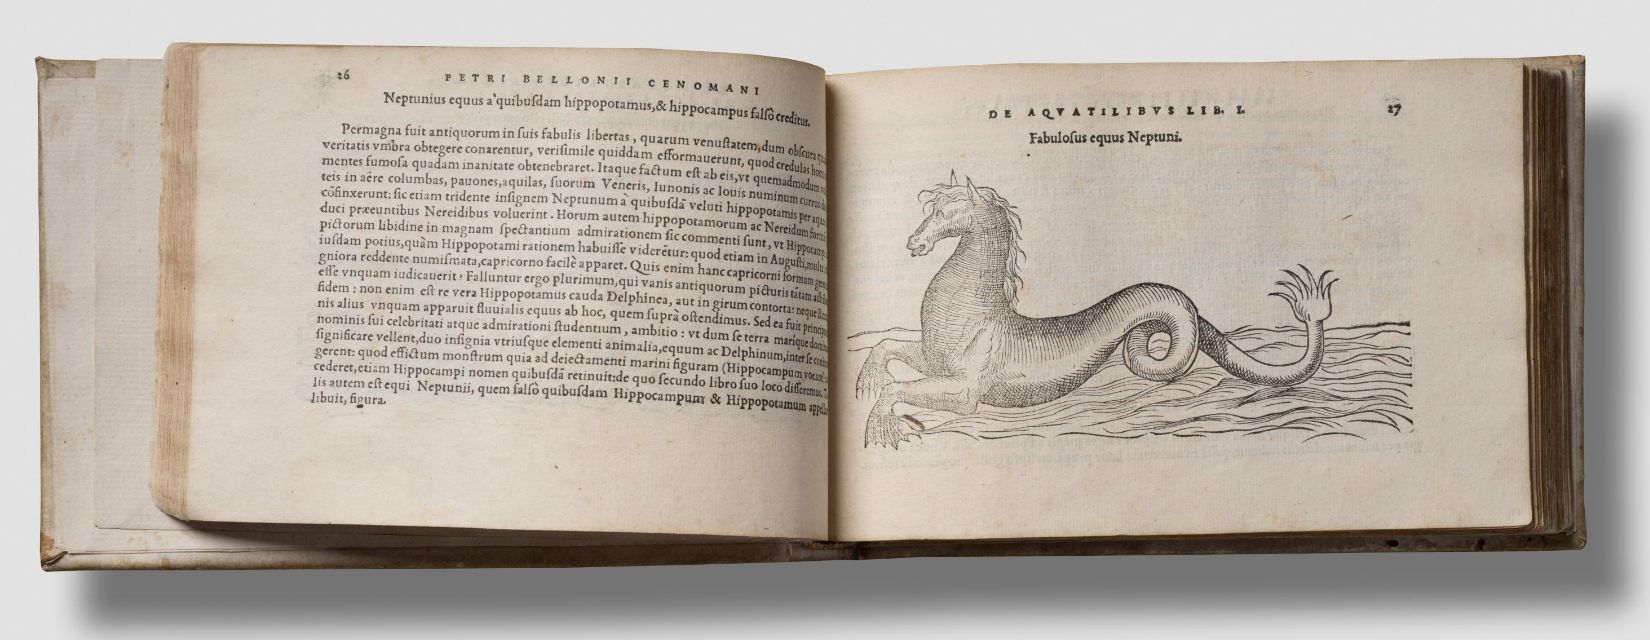 Pierre Belon, De Aquatilibus, 1553. Rare Fish Books Amsterdam](http://rarefishbooks.com/) - Photography Cees de Jonge